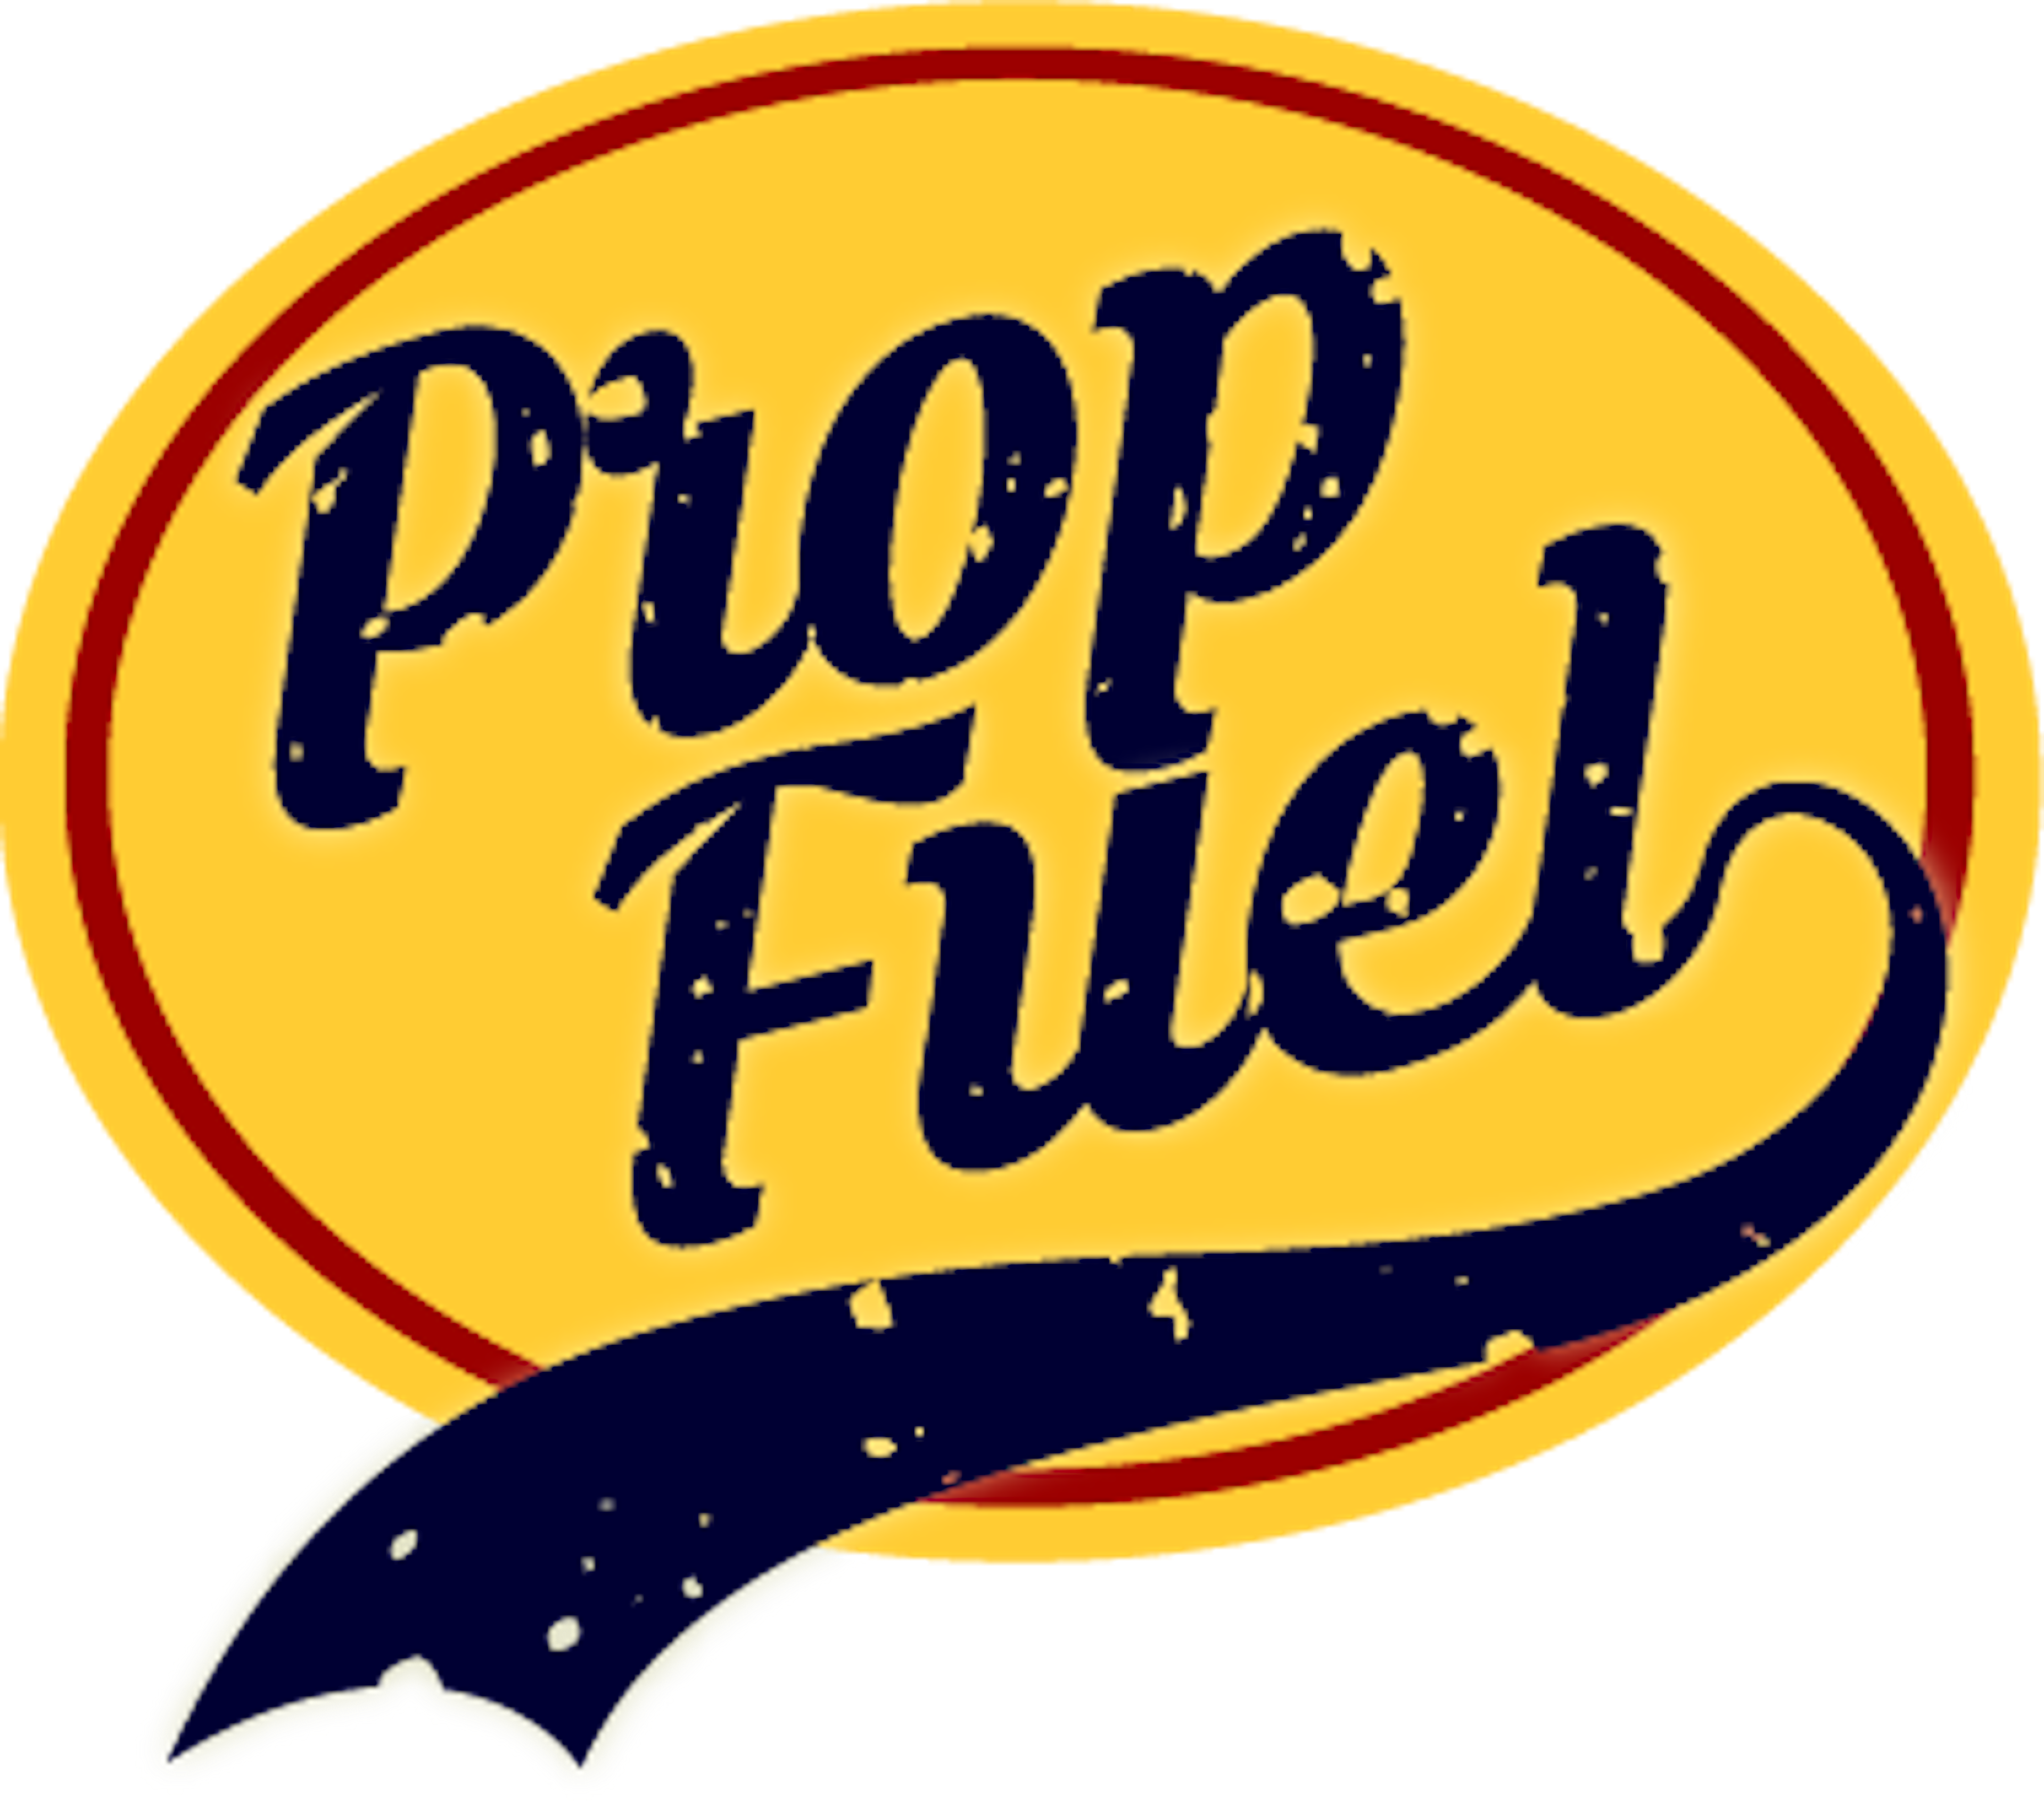 PropFuel Logo